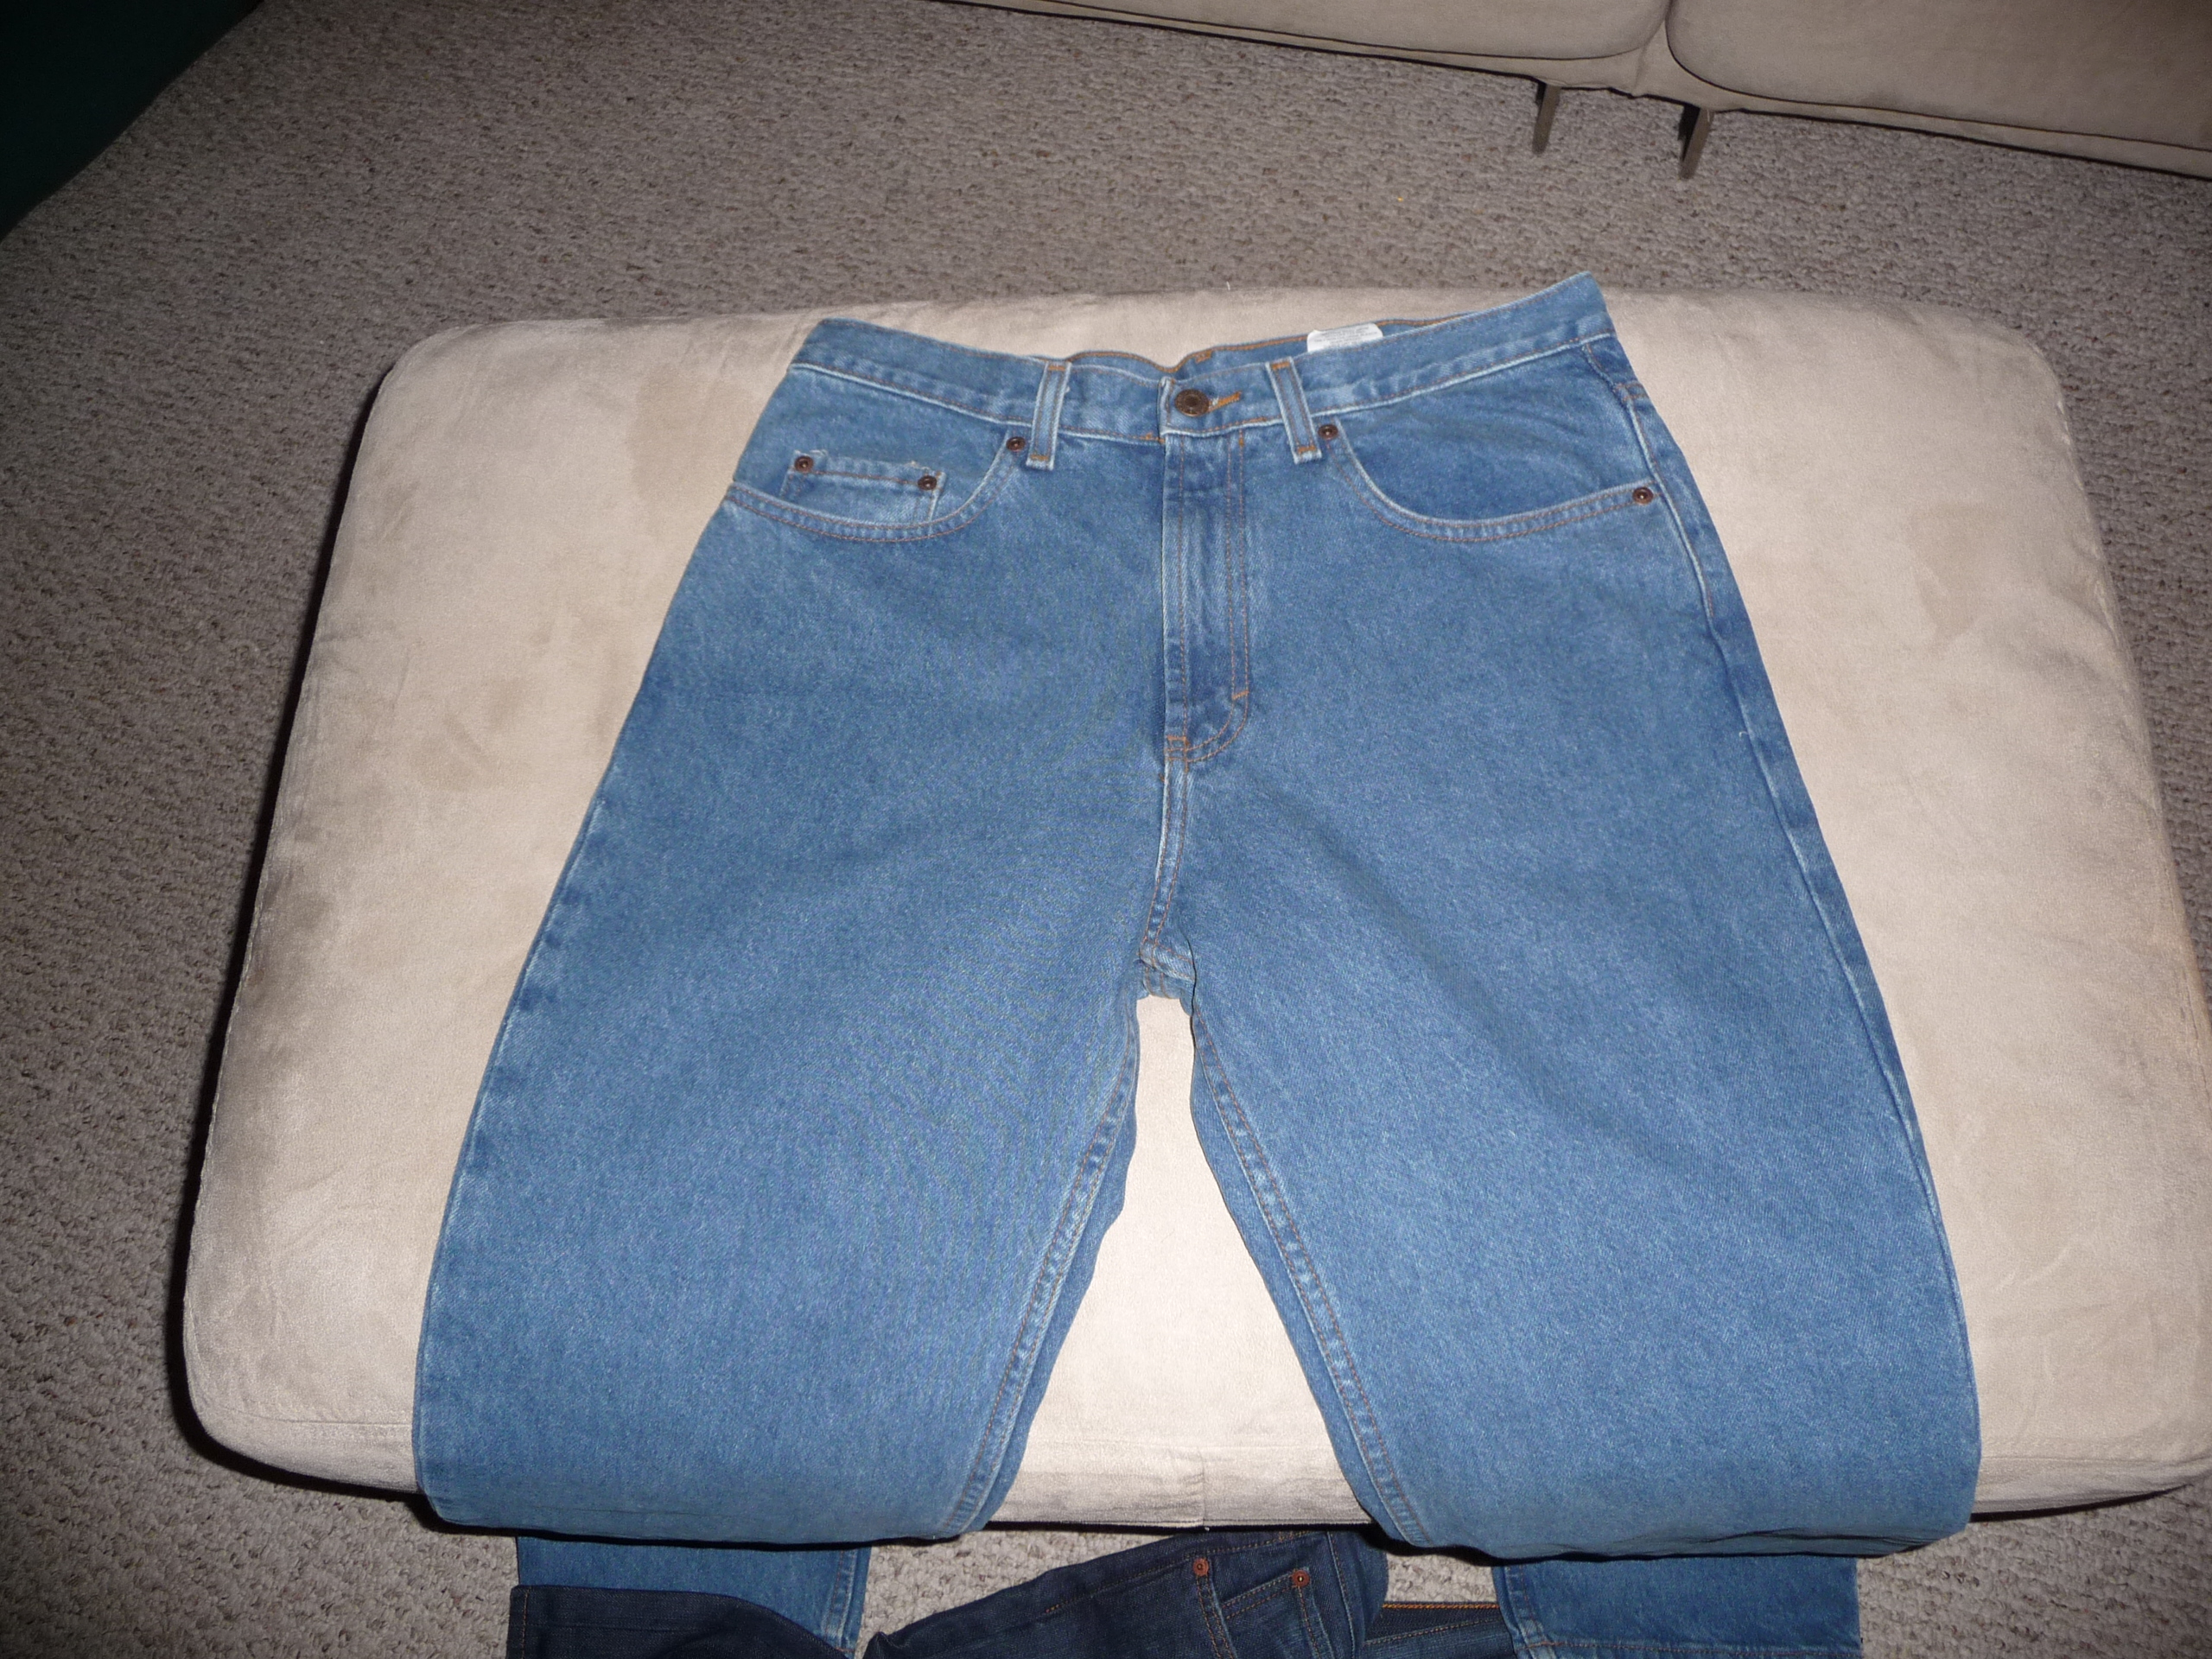 kirkland jeans costco